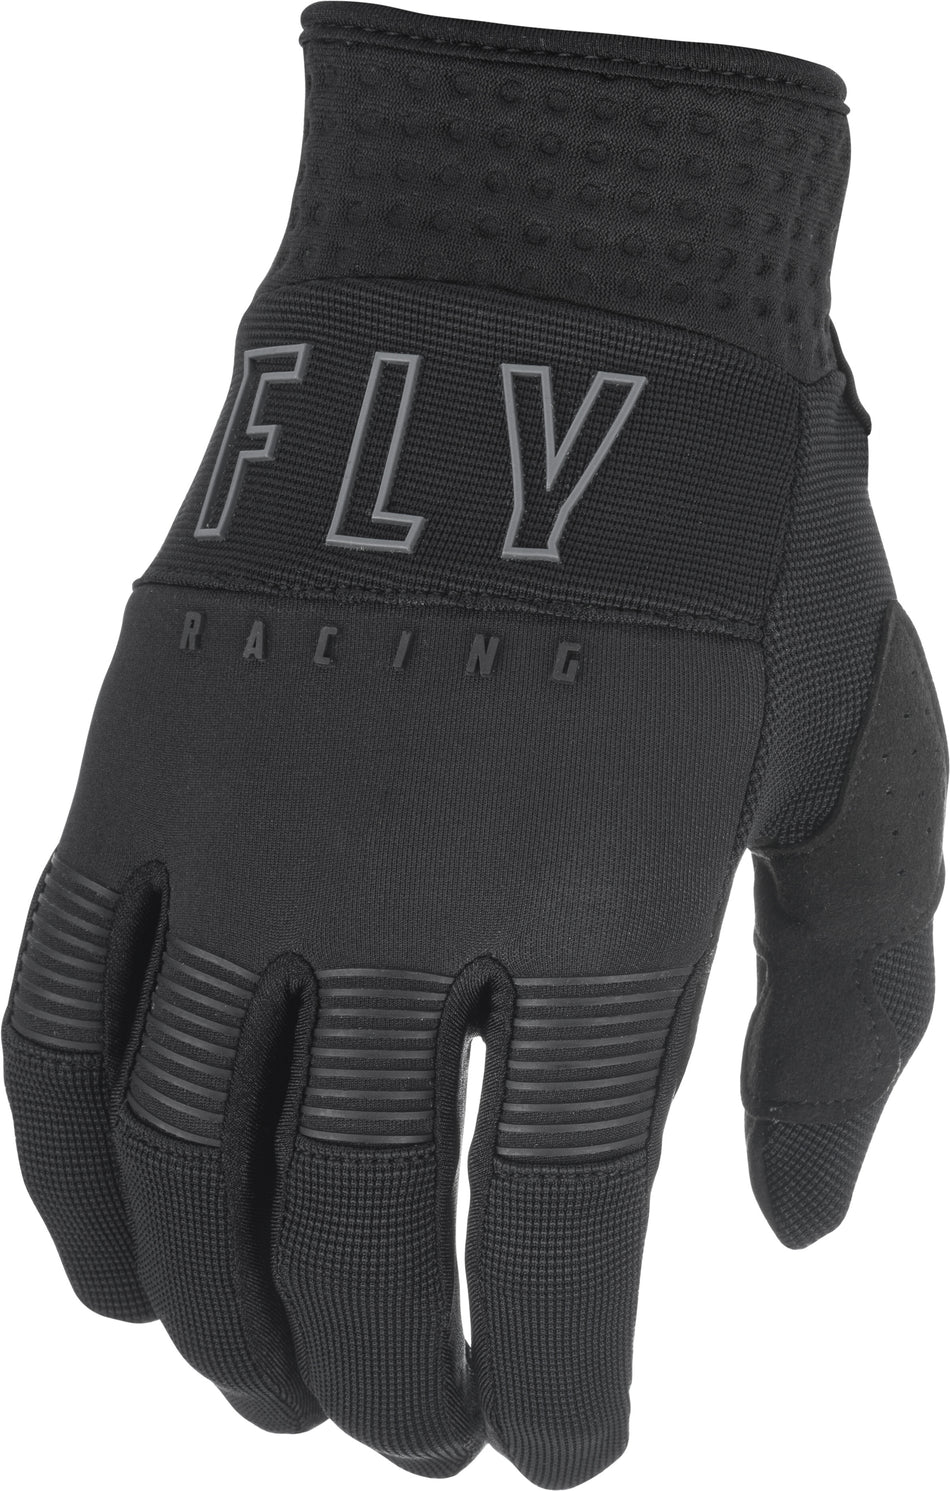 FLY RACING F-16 Gloves Black Sz 10 374-91710